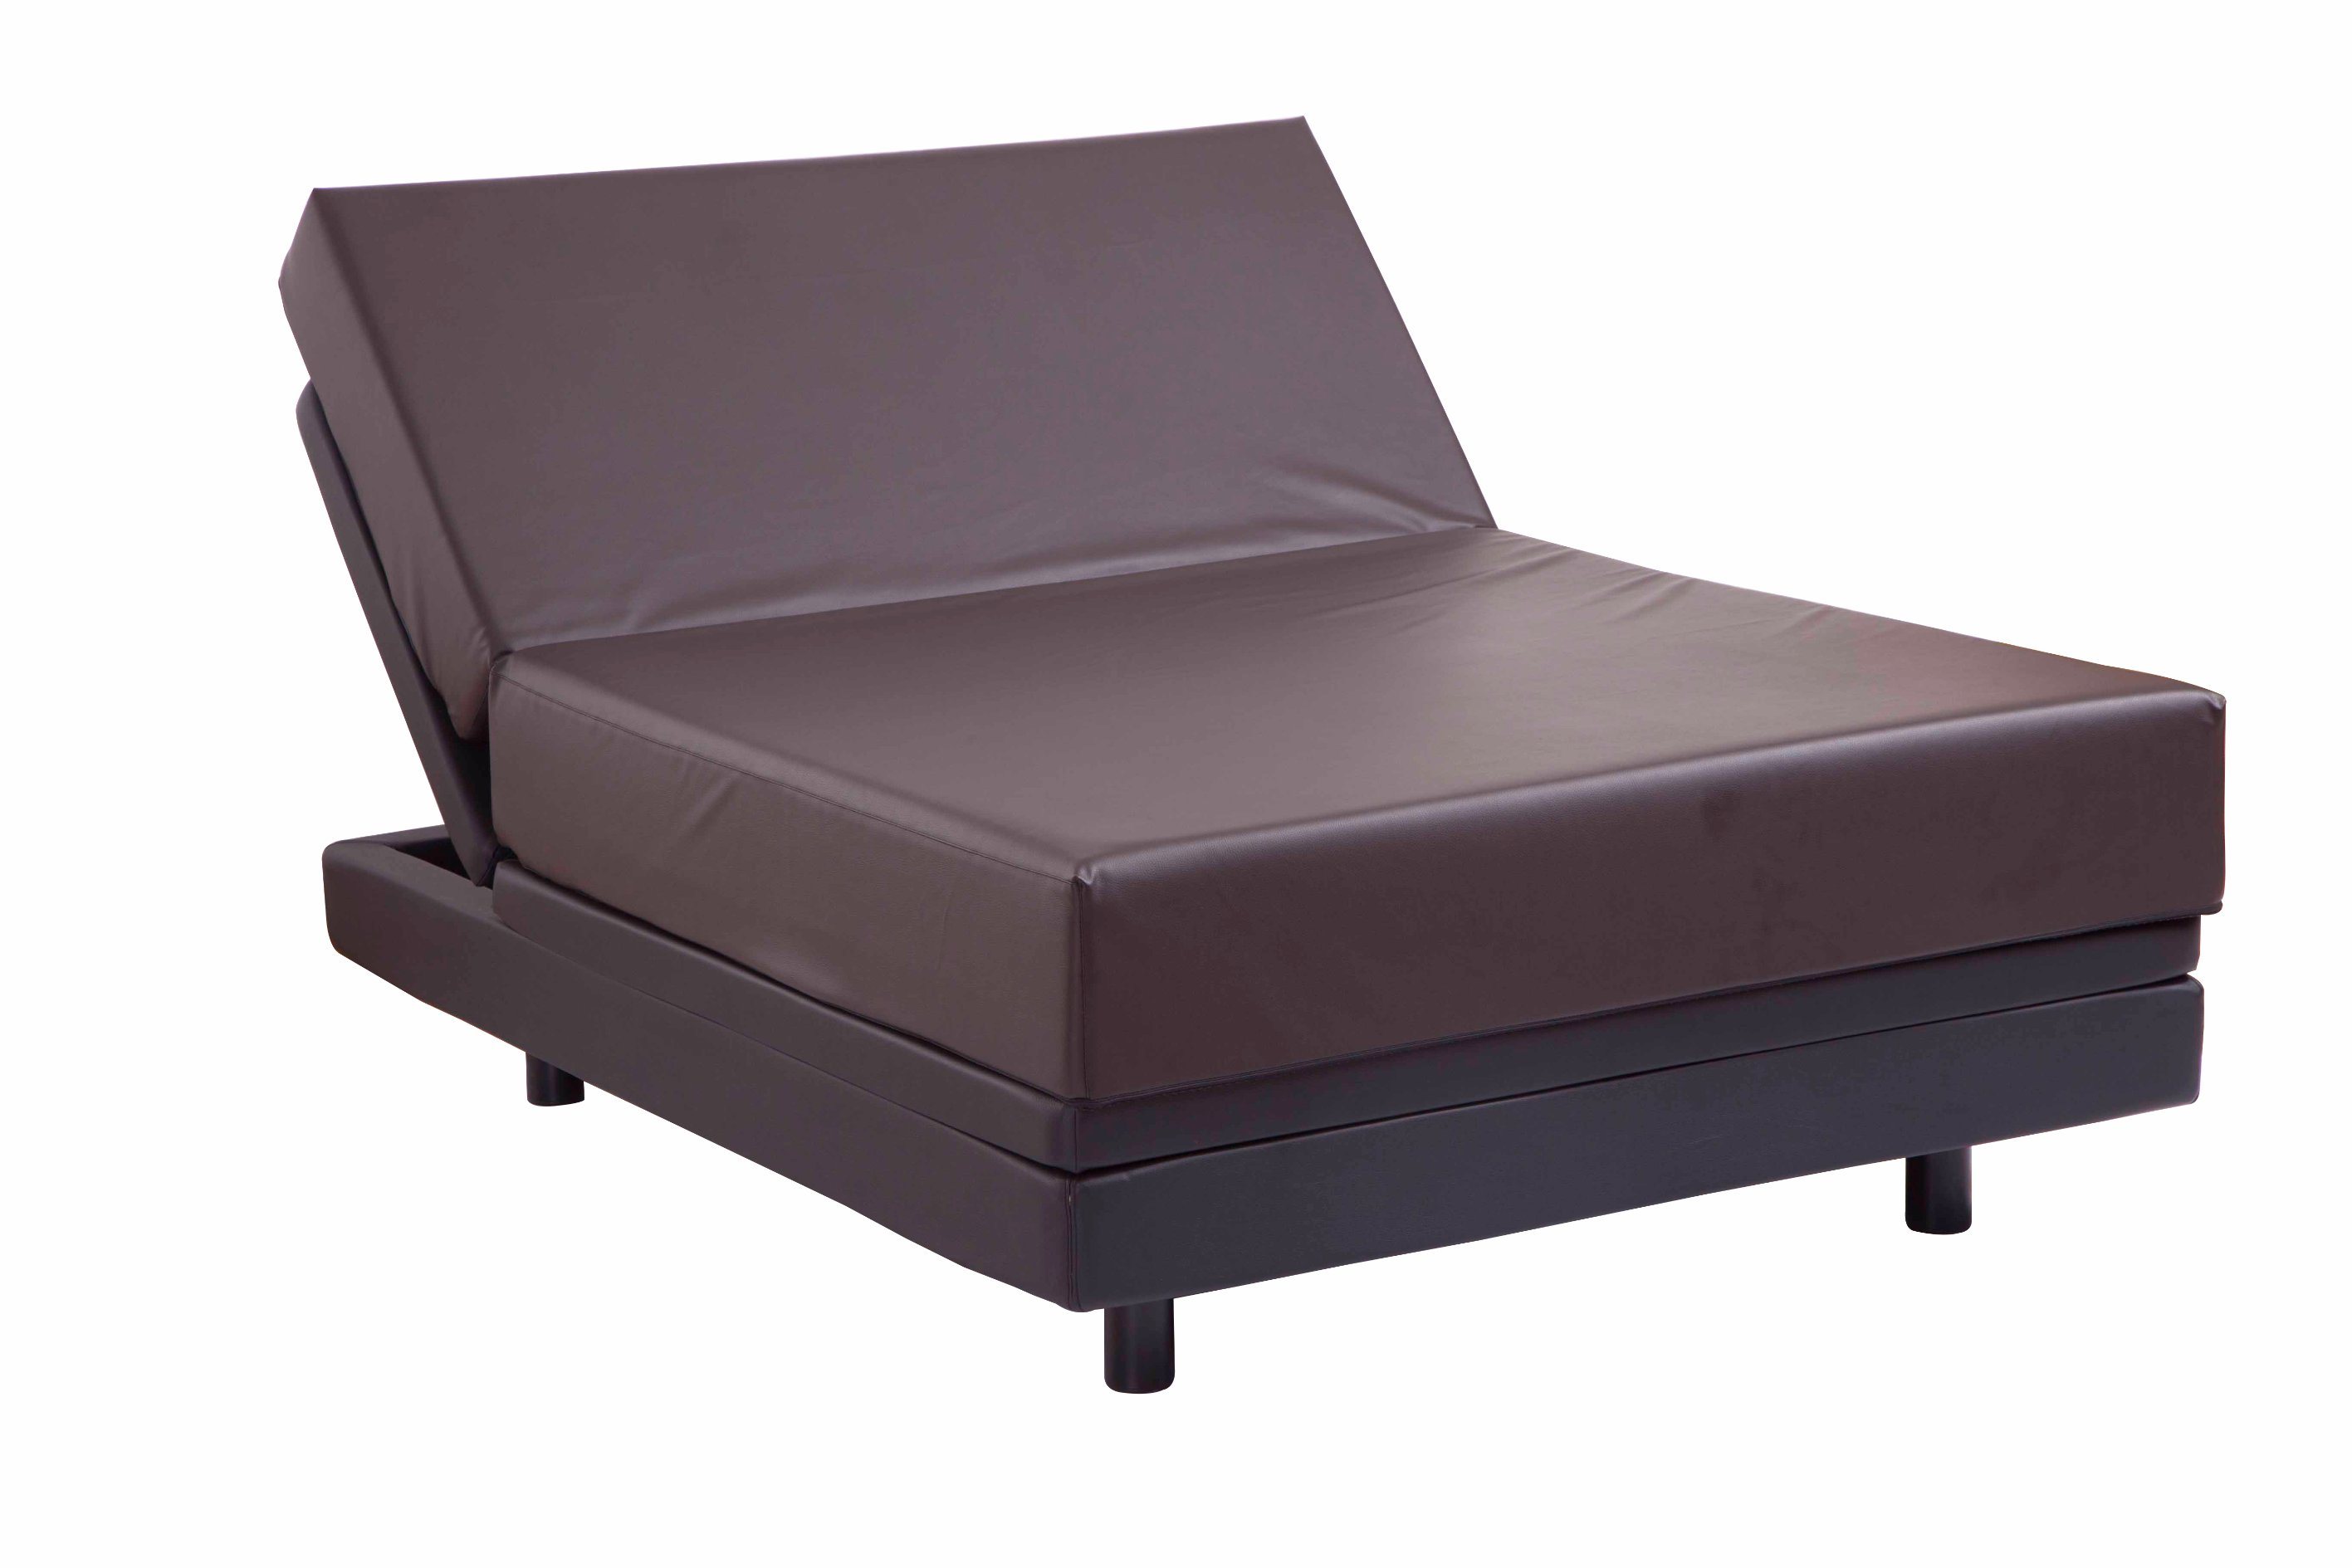 Home Furniture Cinema Entertainment Massage Adjustable Bed